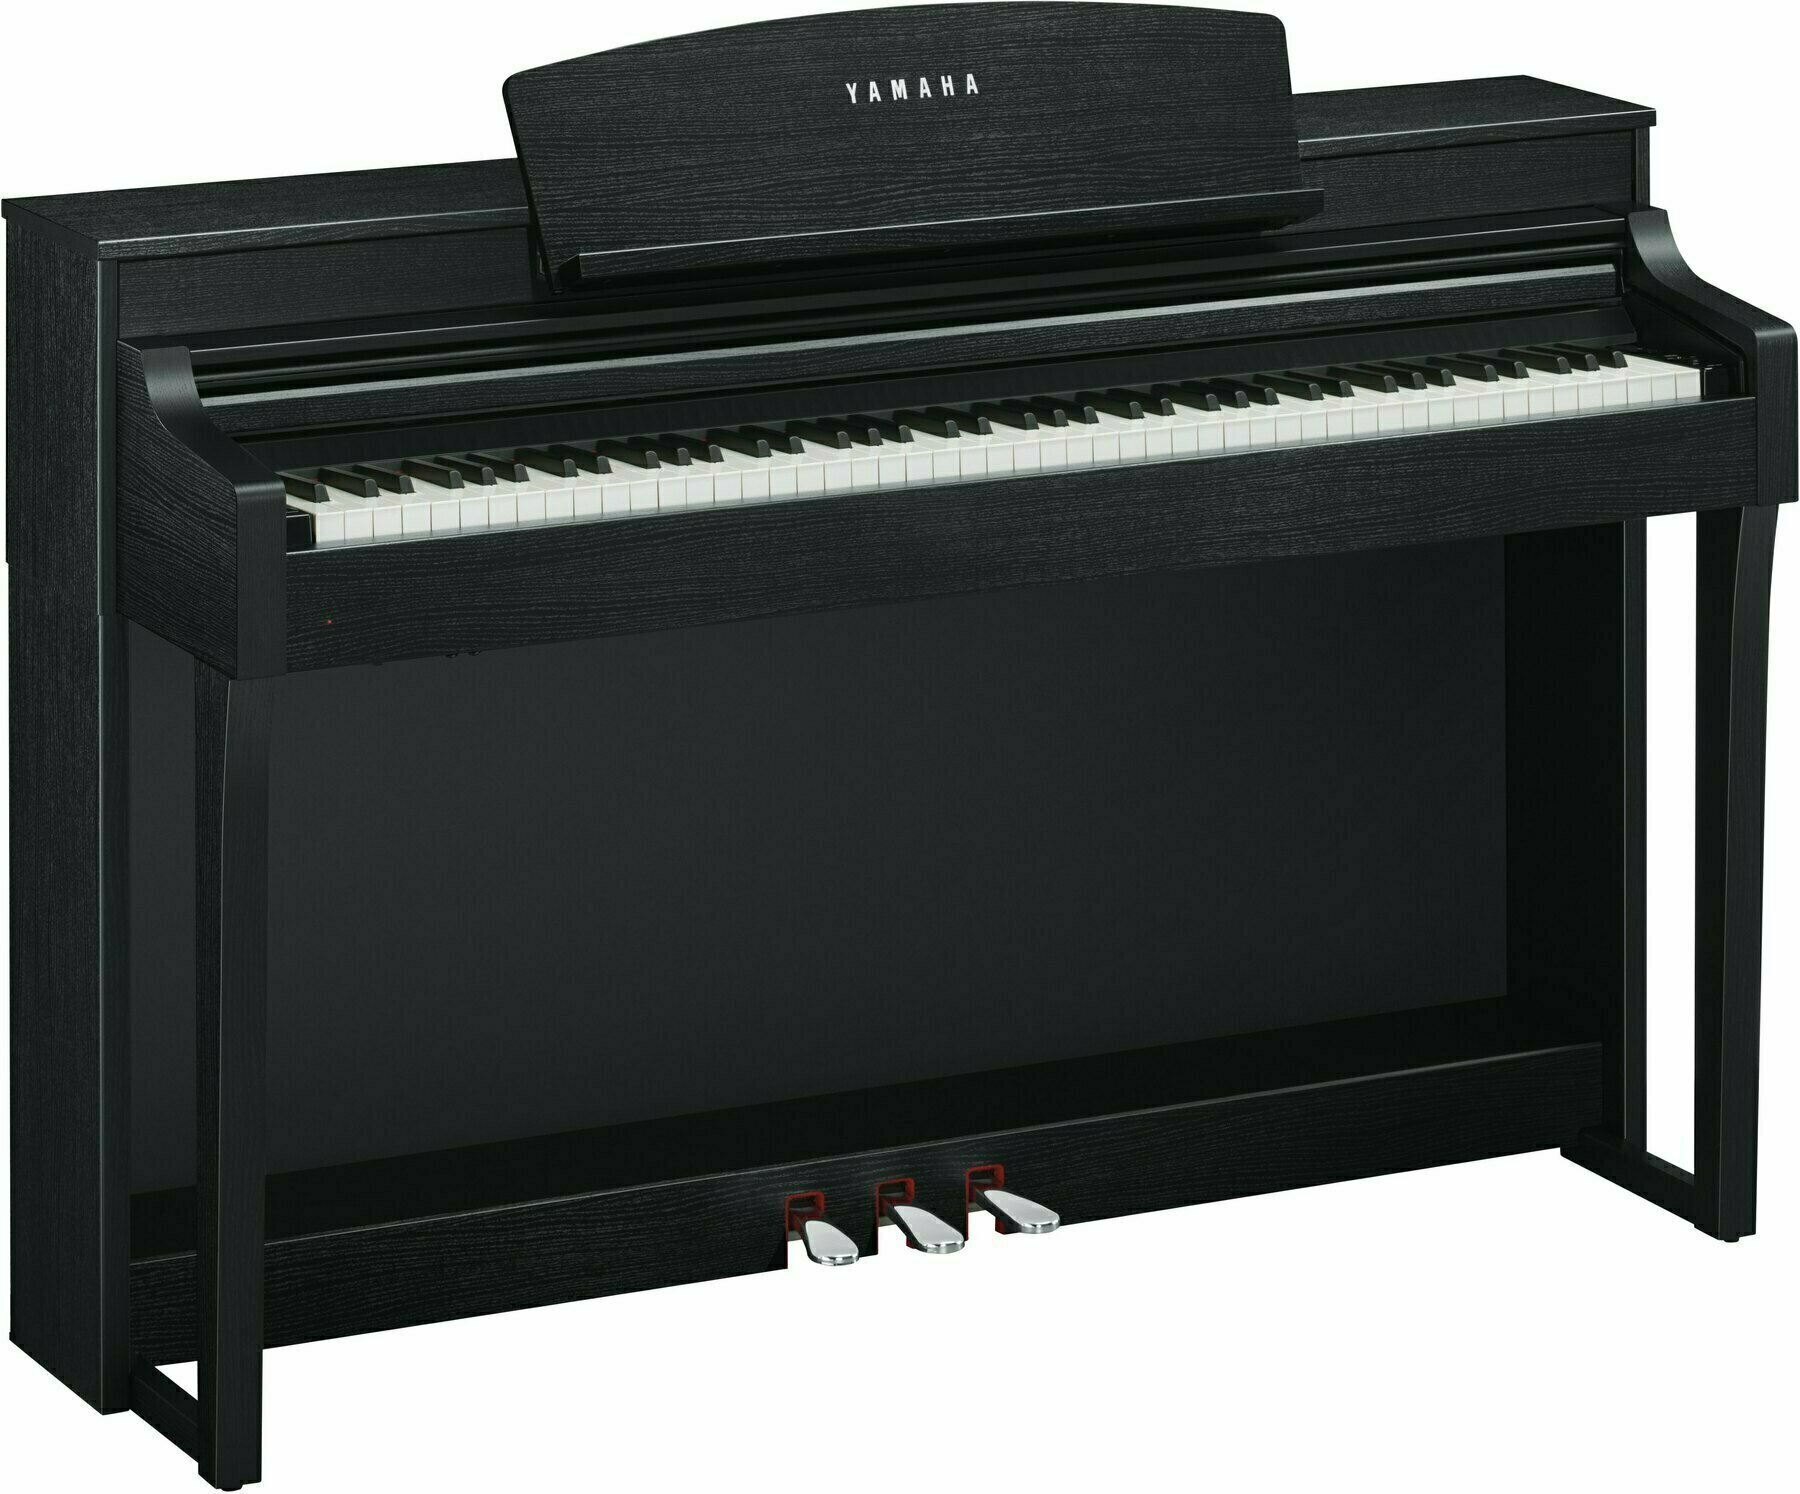 Digital Piano Yamaha CSP 150 Black Digital Piano